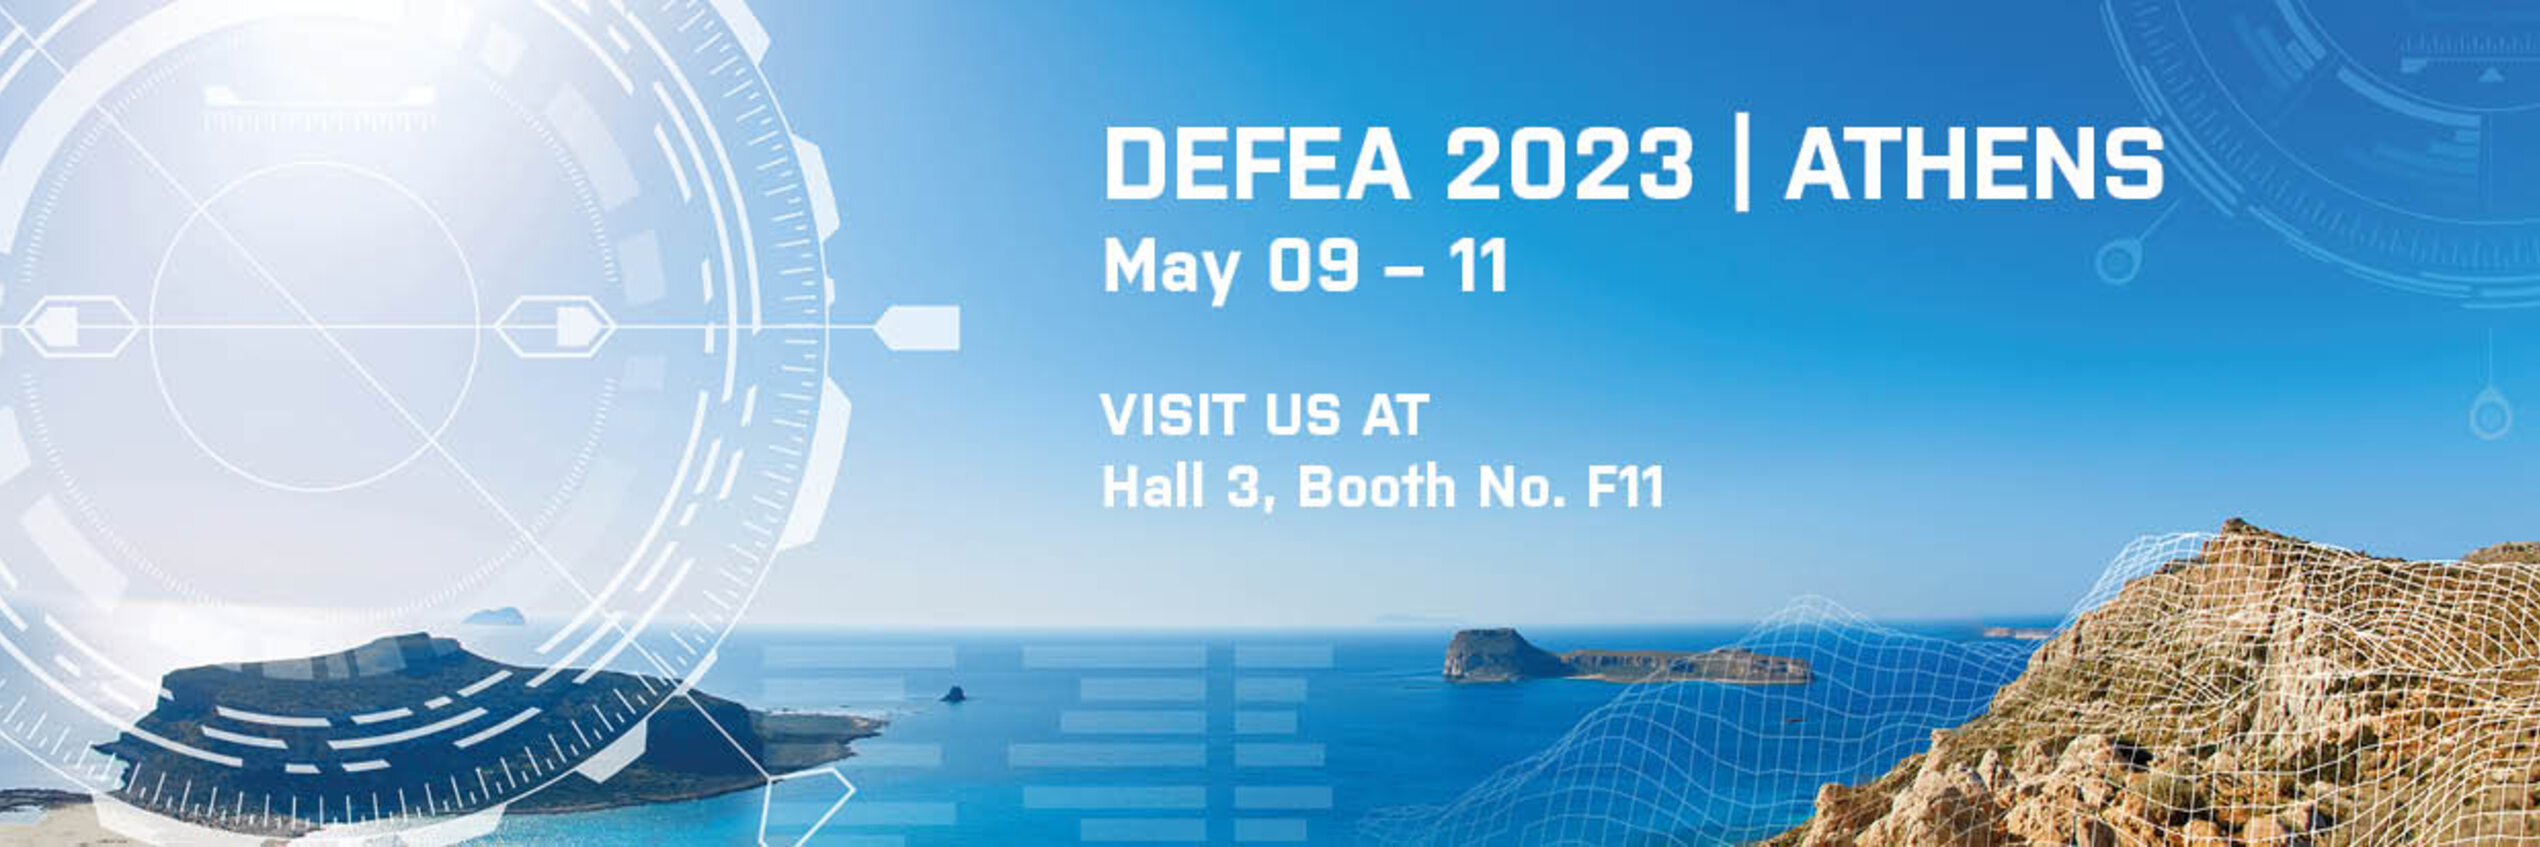 Diehl Defence exhibits at the Defence Exhibition Athens (DEFEA) 2023